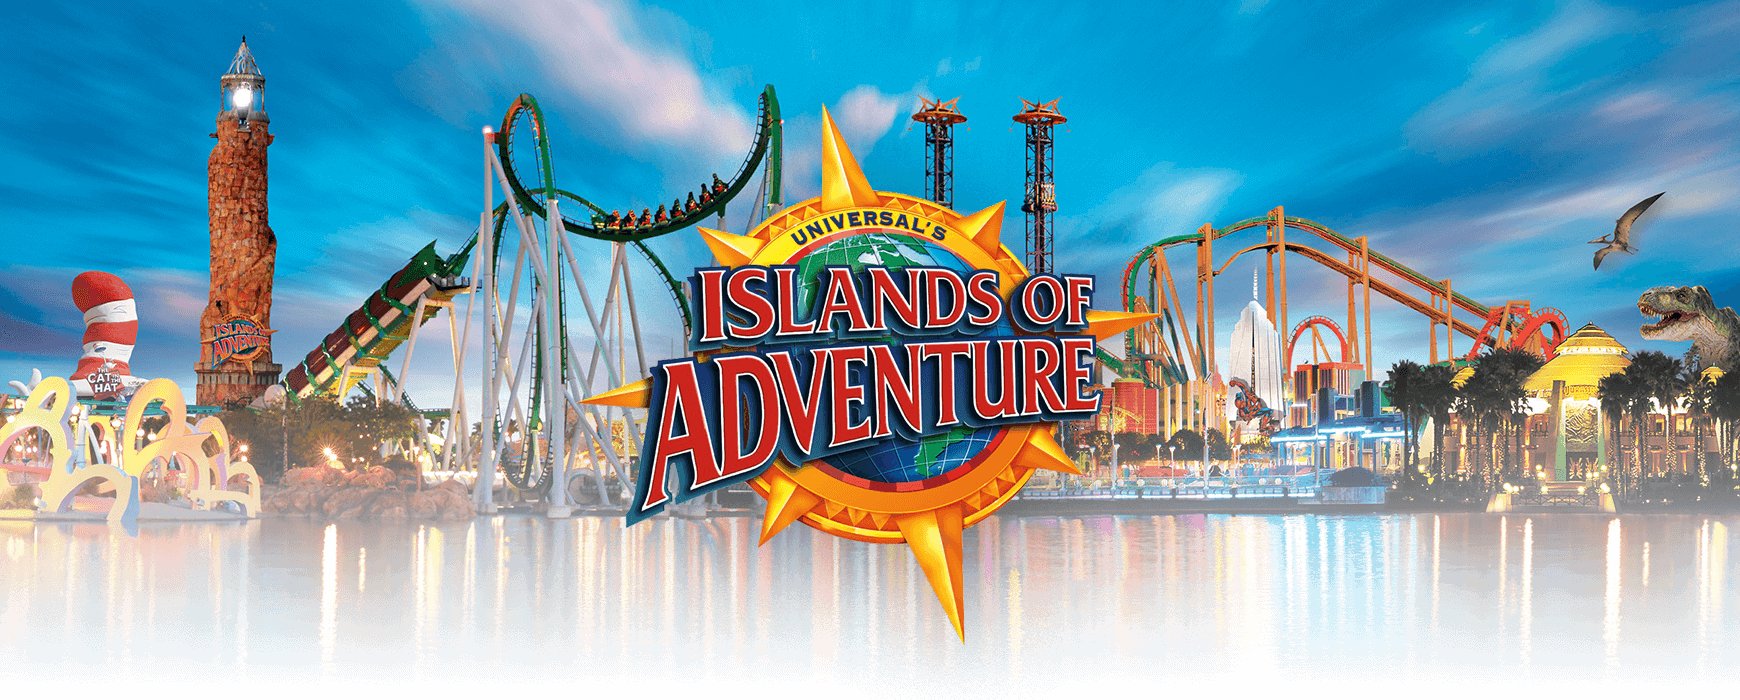 Island of Adventures | 1 Day Pass - $99.00 Orlando Ticket Office